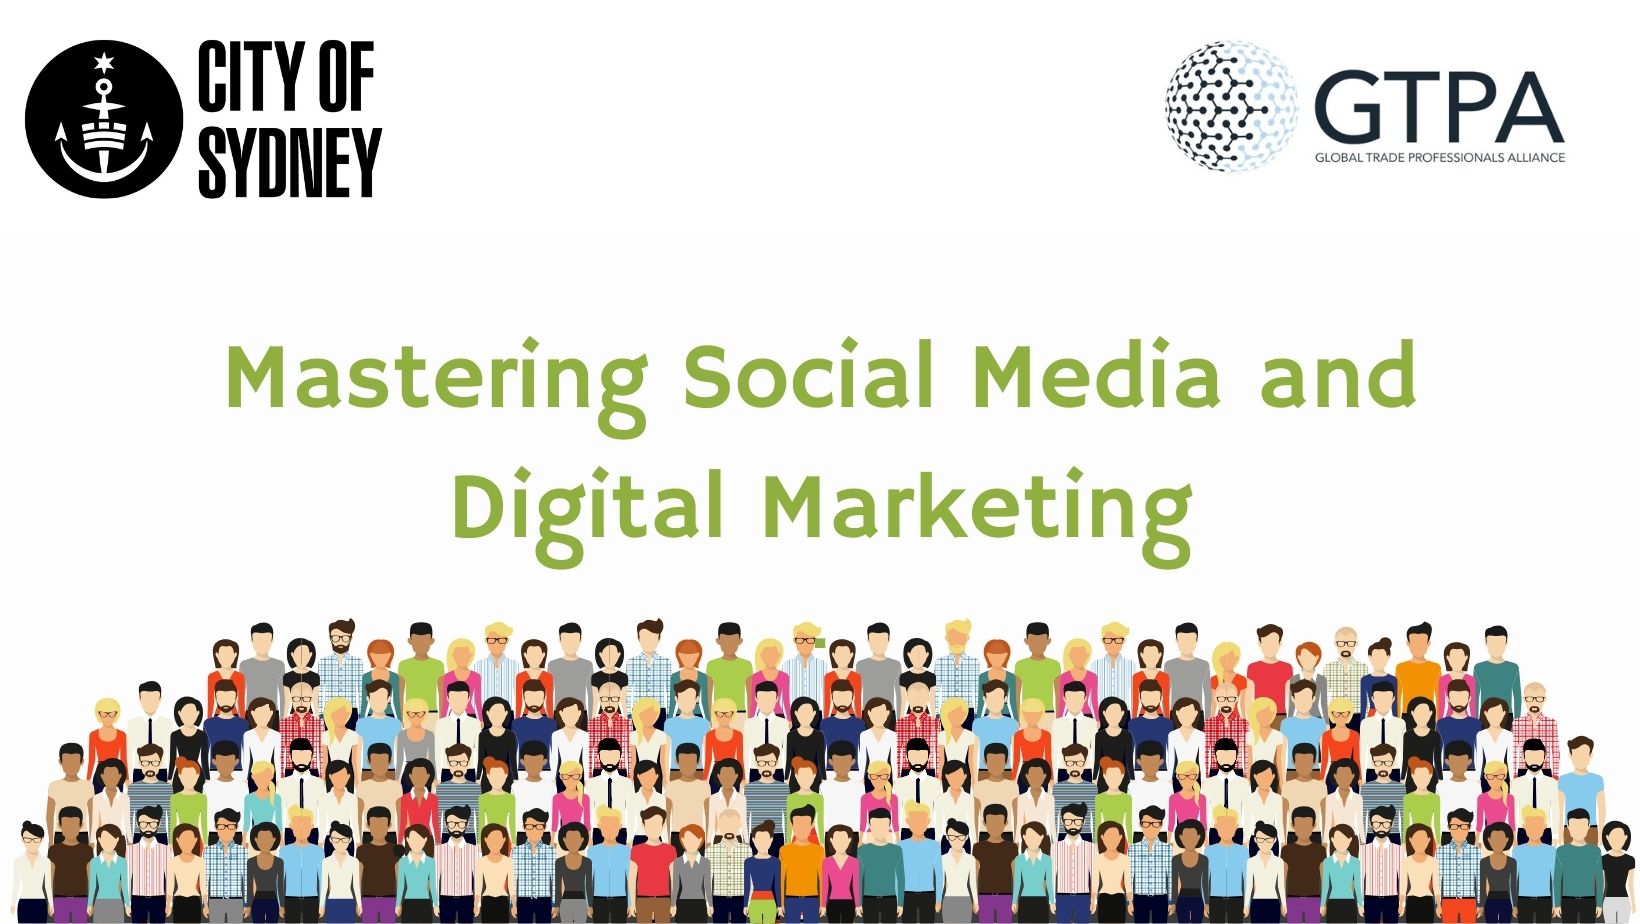 Mastering Social Media and Digital Marketing: Learn the Art of Strategic Online Engagement and Digital Marketing